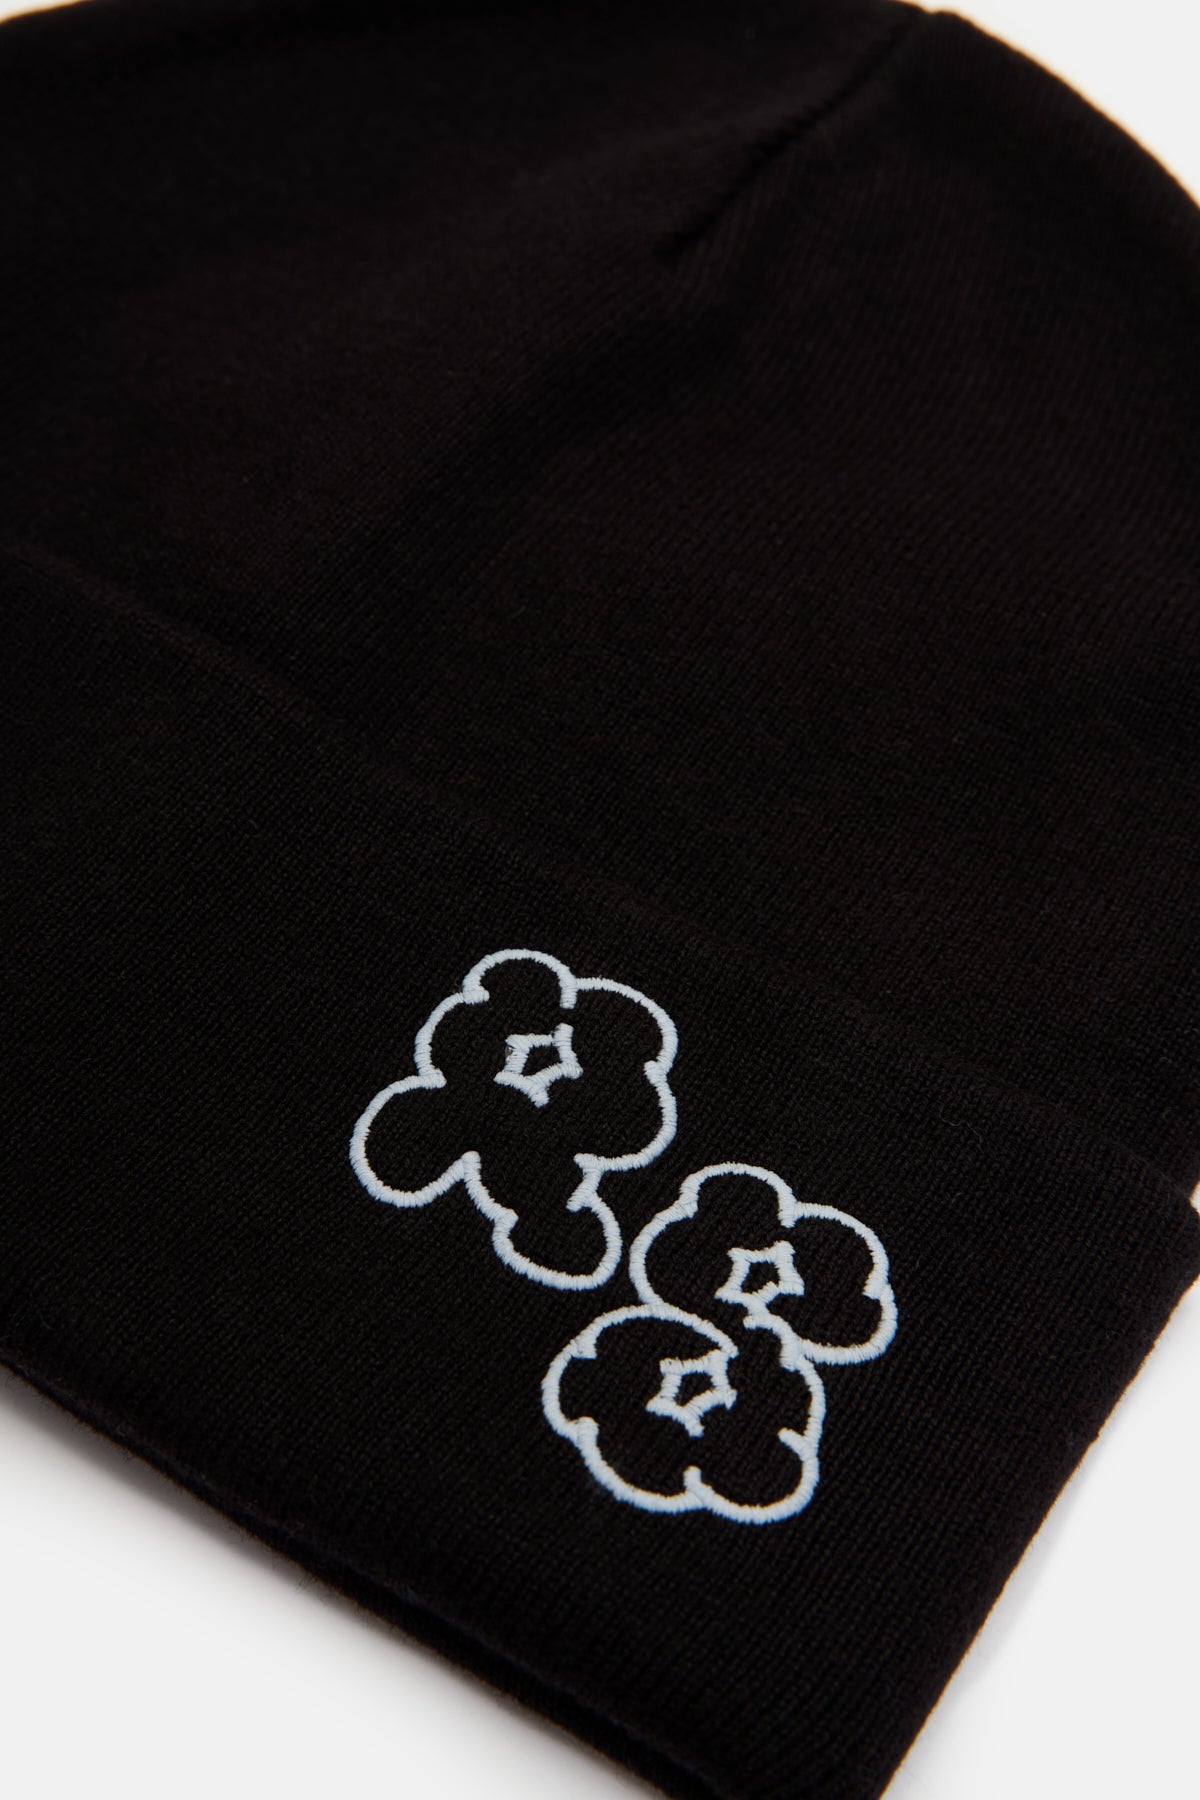 Cloud Logo Embroidered Beanie Black